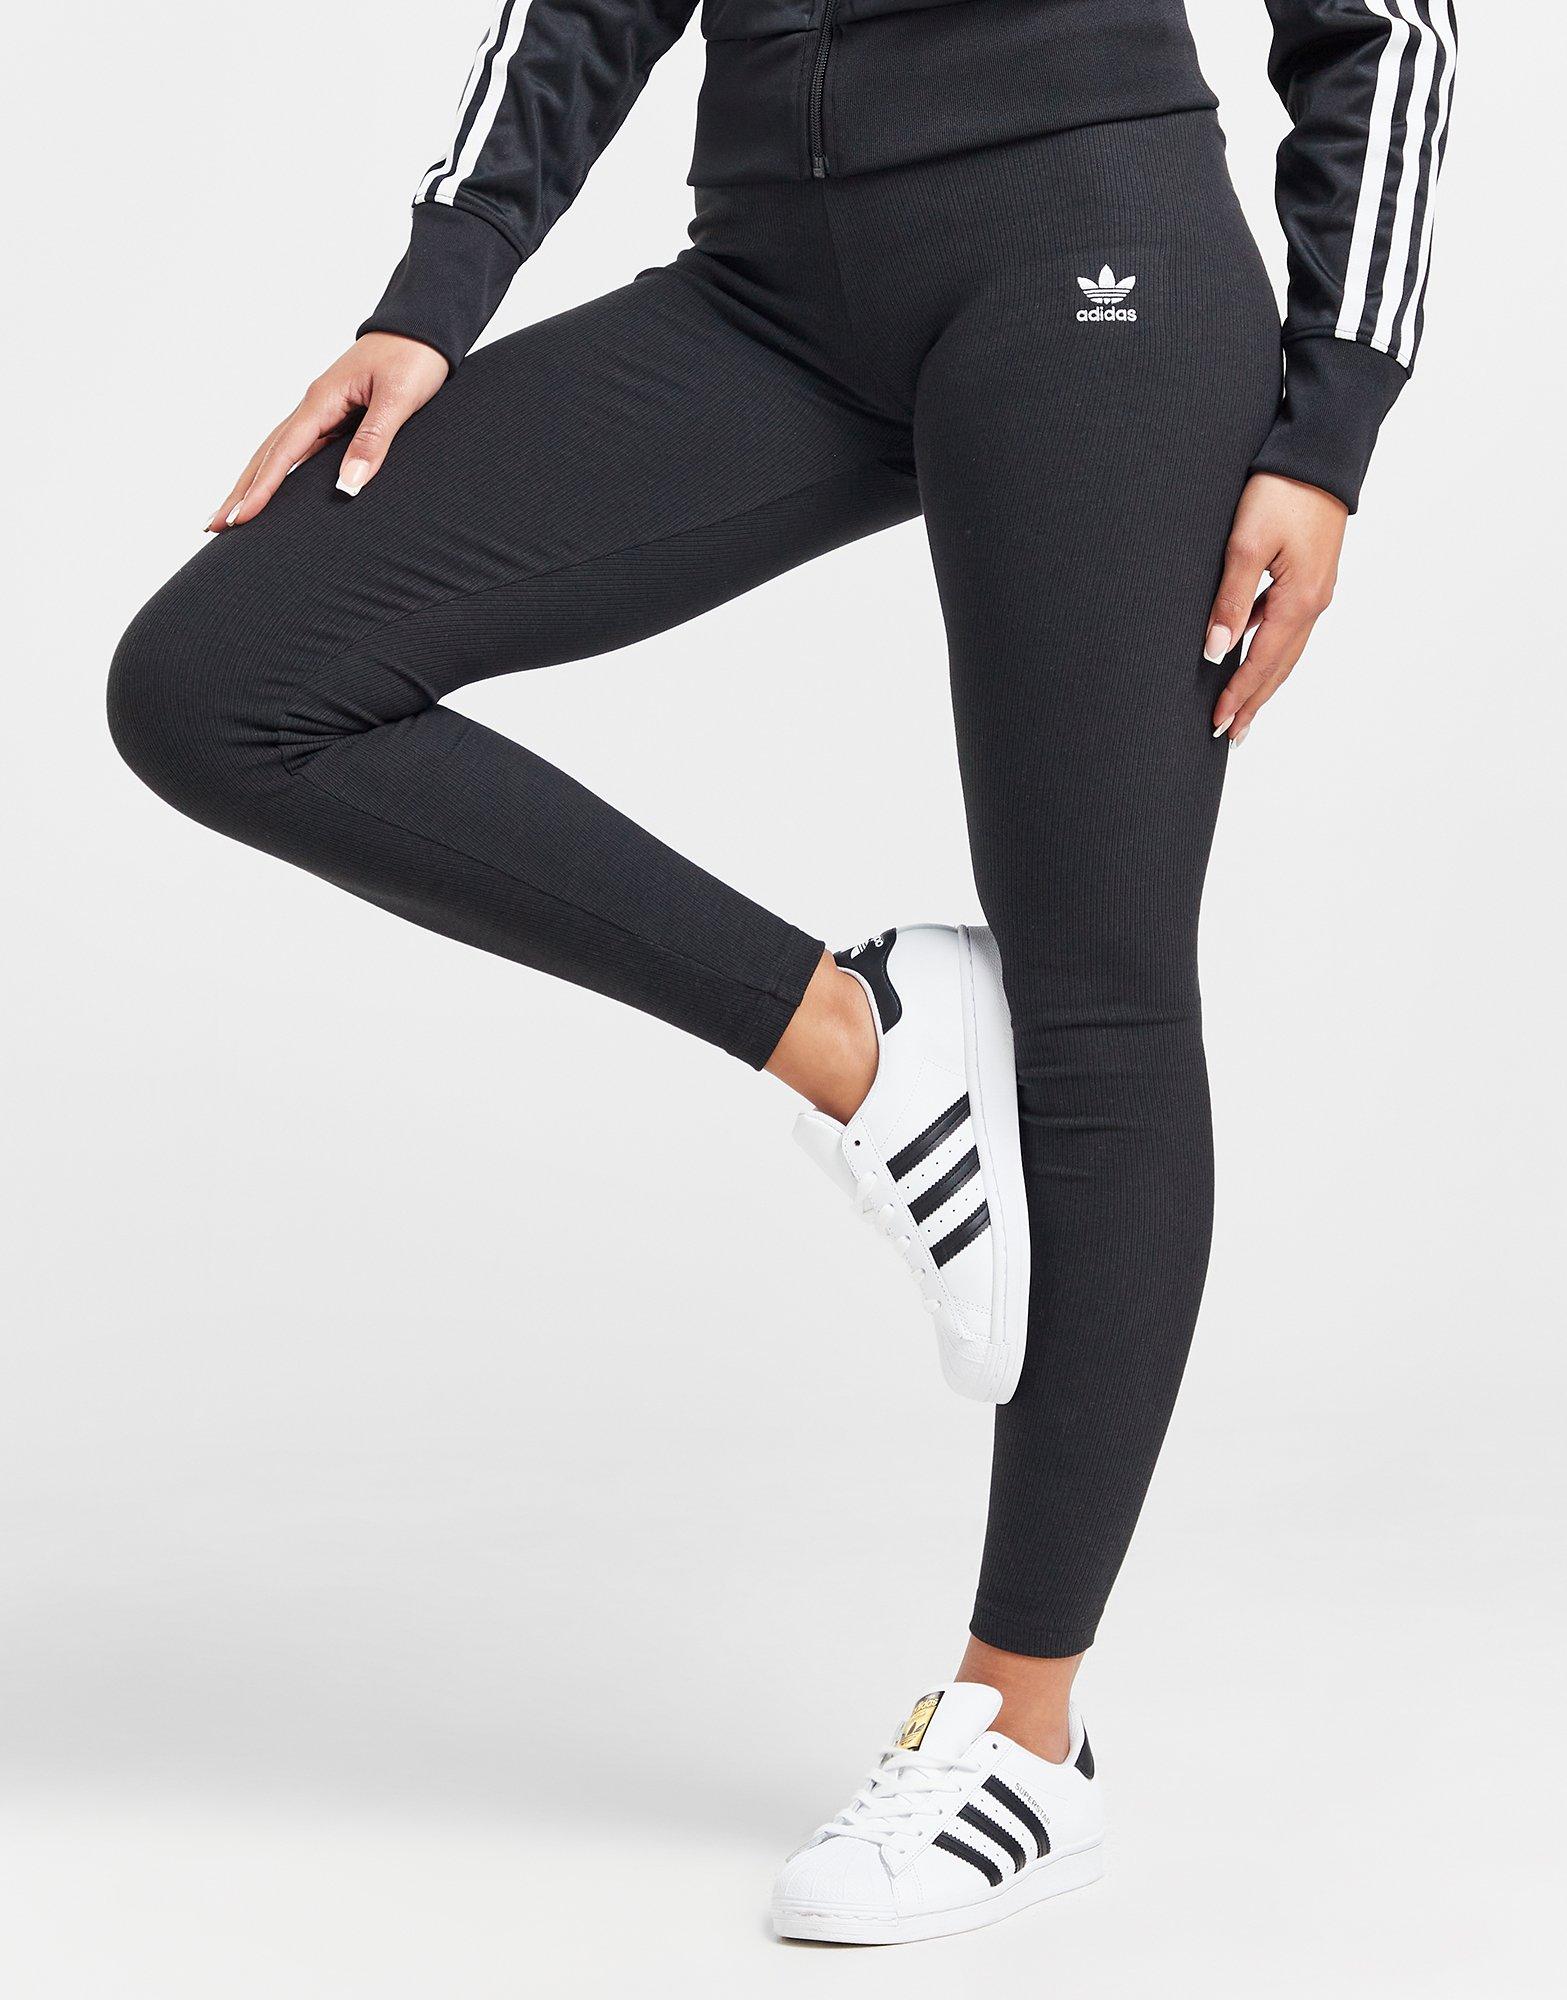 adidas Running Plus leggings with three stripes in black